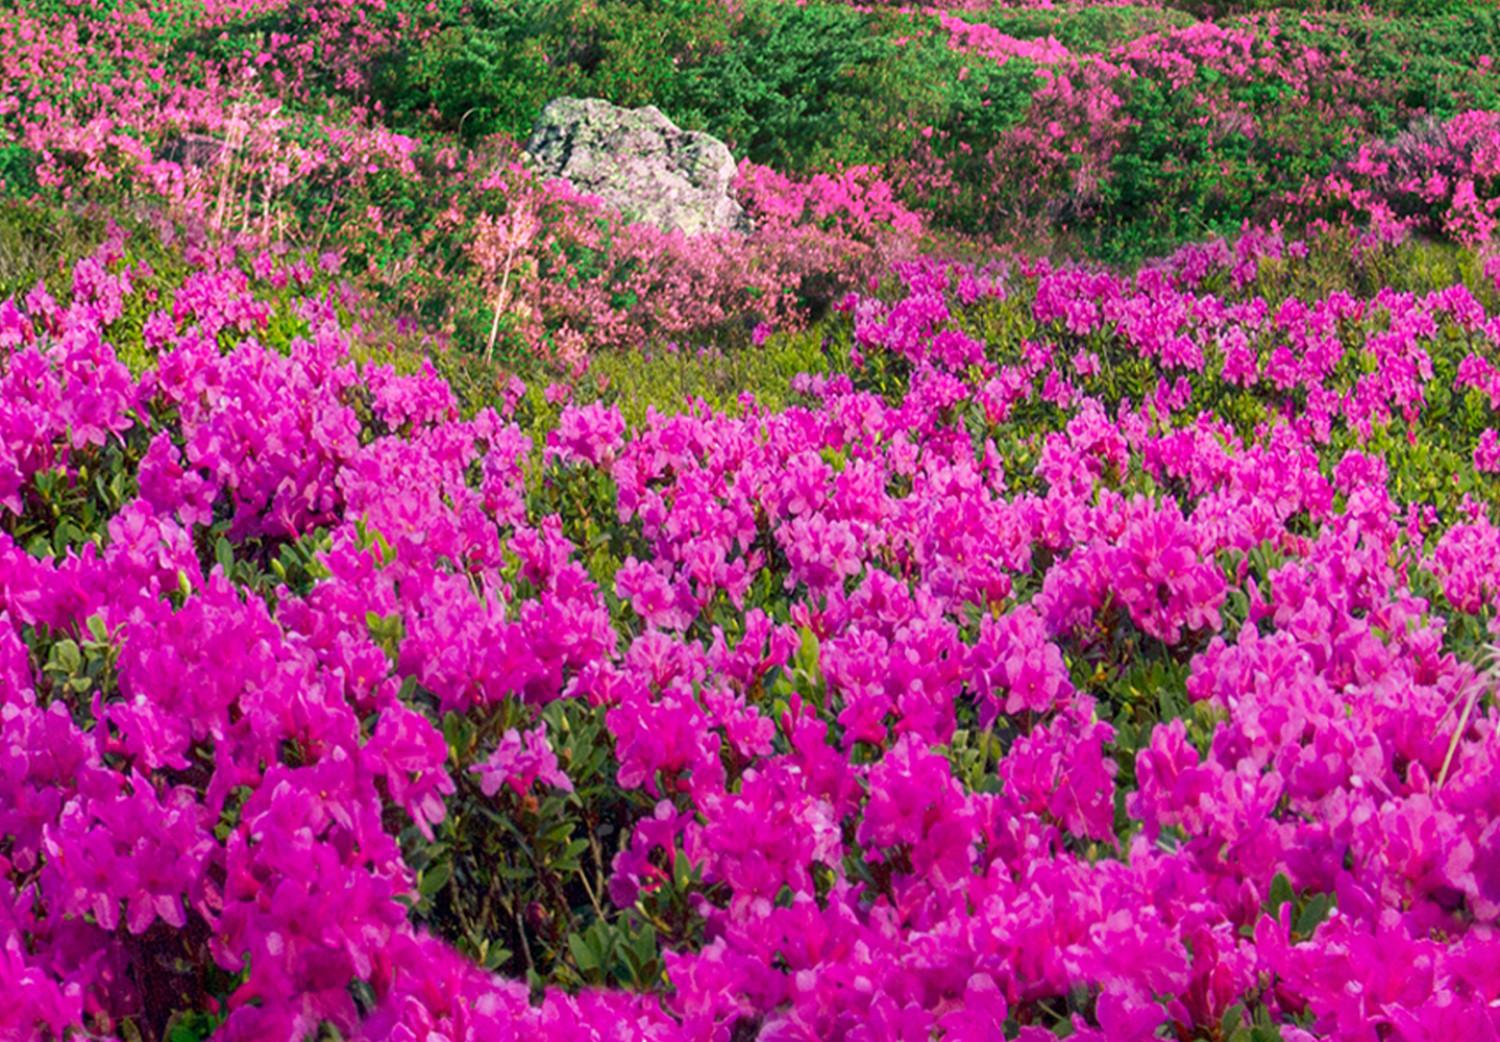 Cuadro decorativo Alpine Rhododendrons (1 Part) Wide